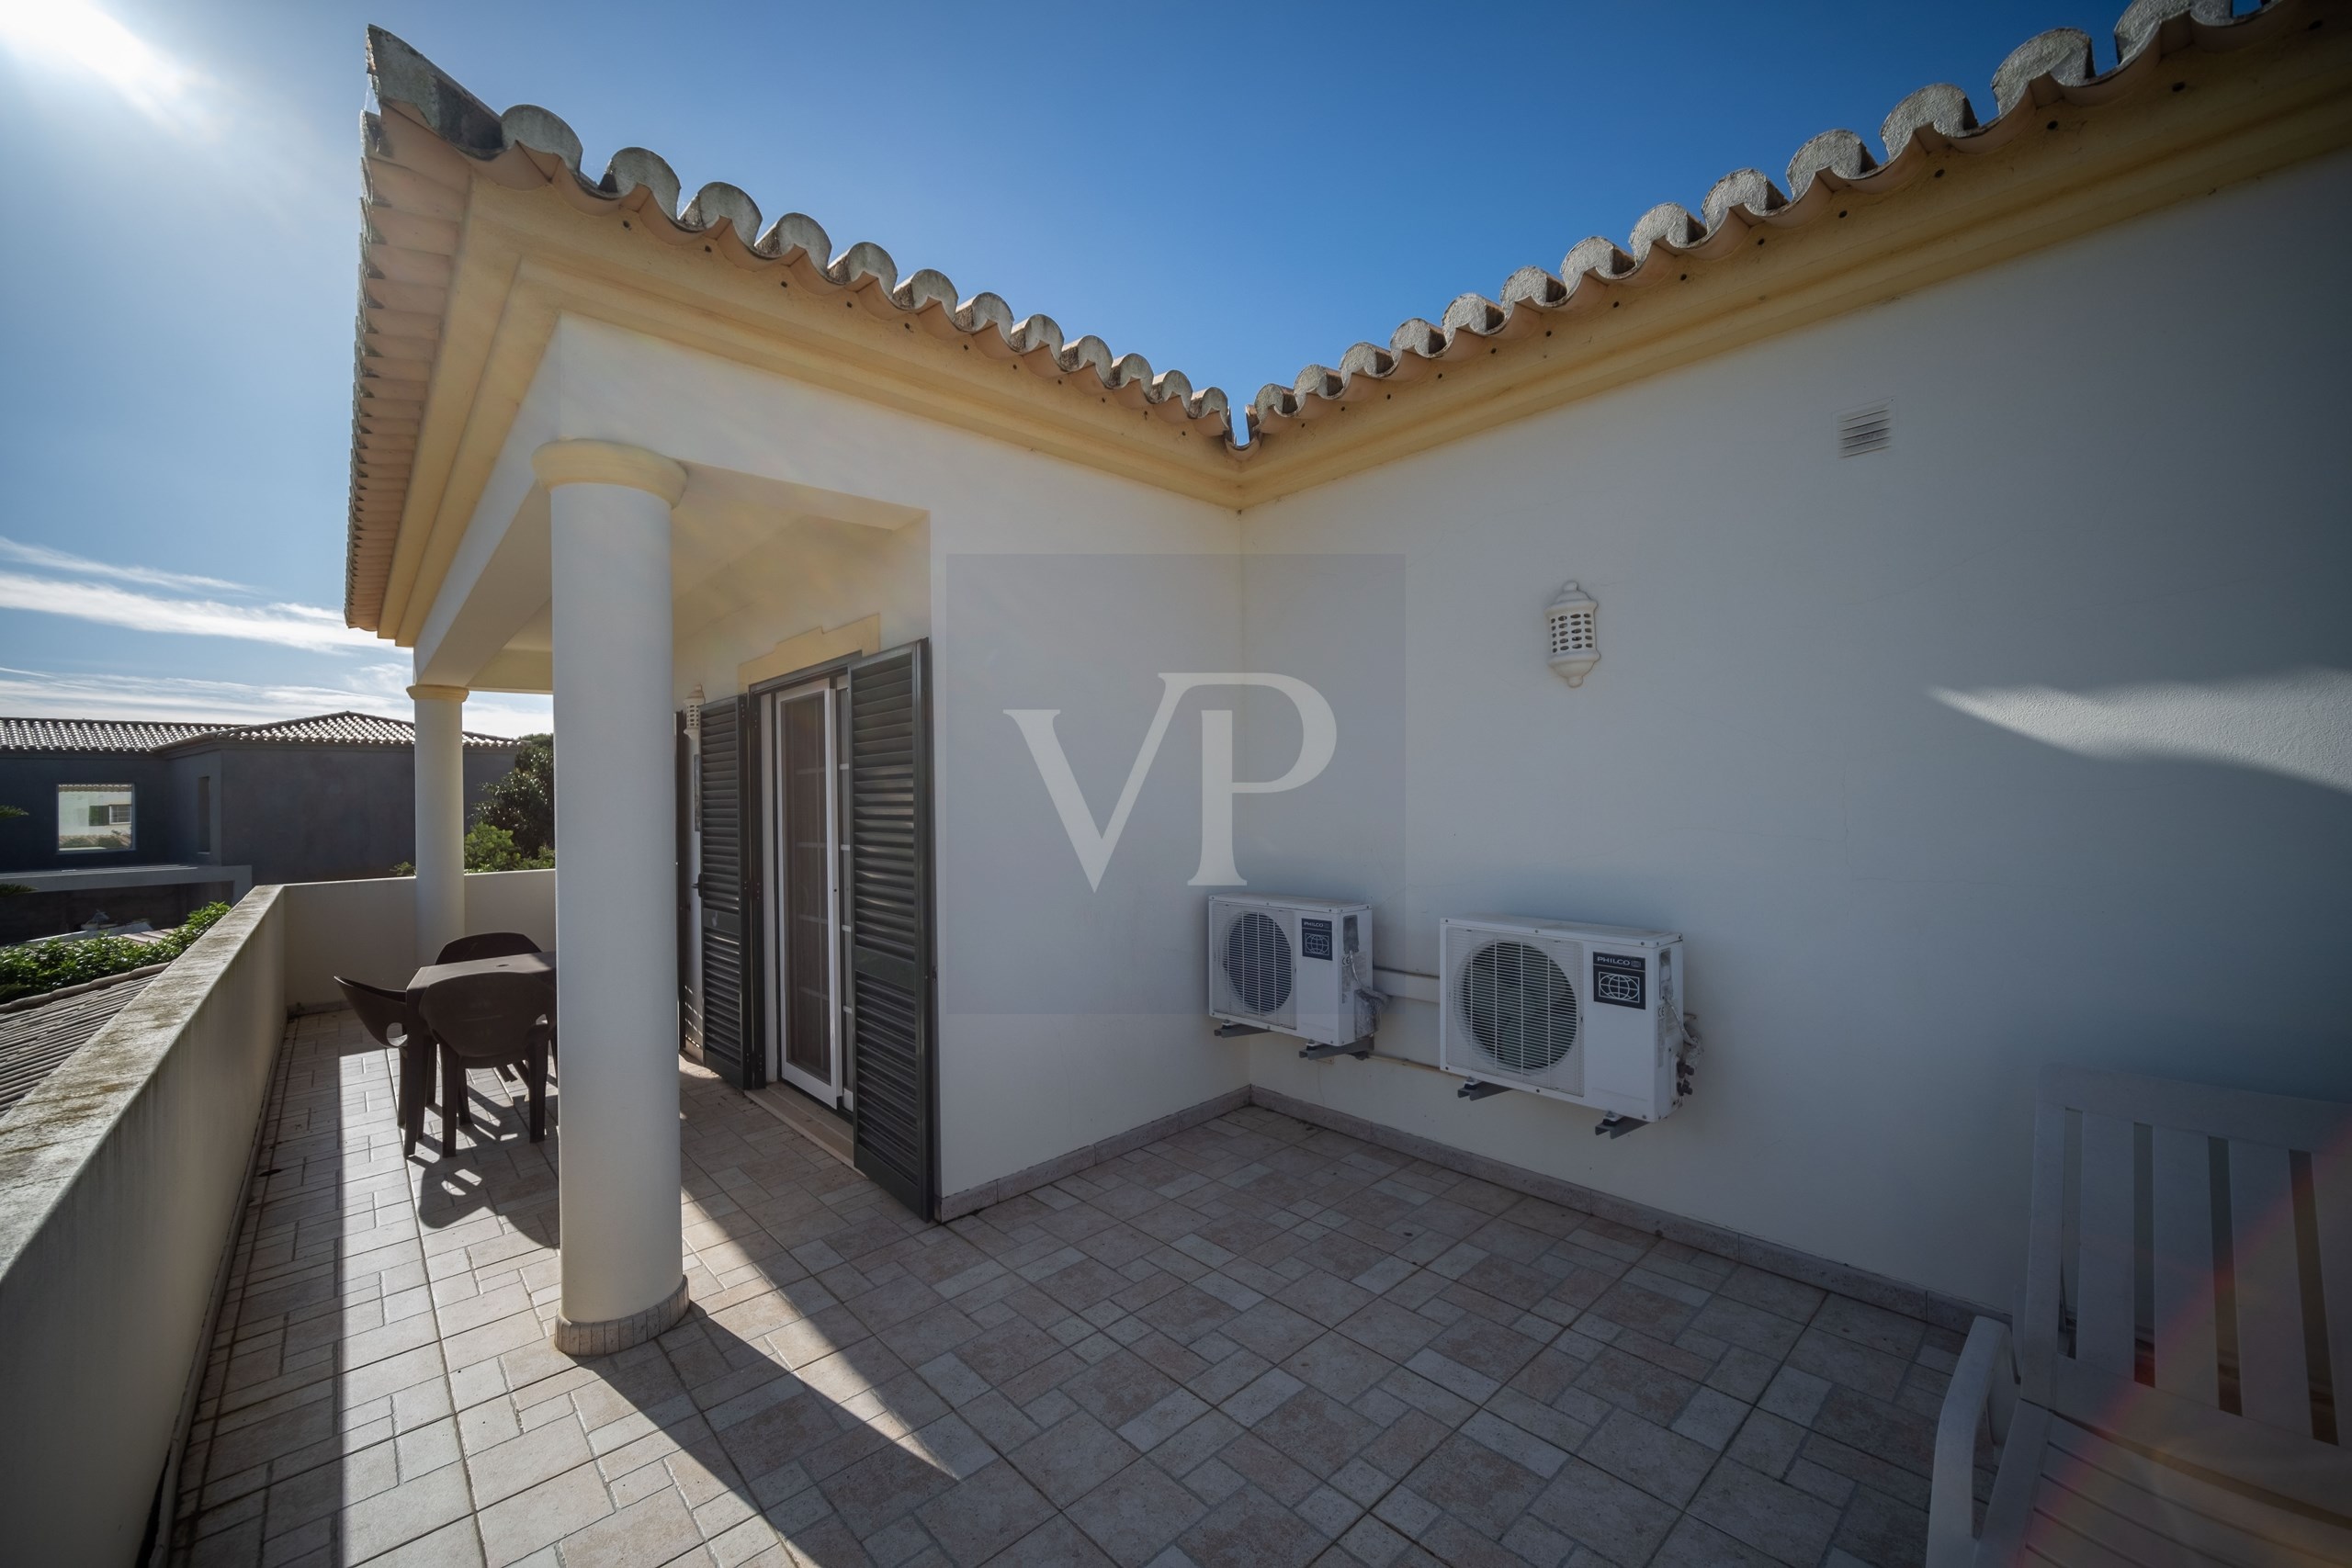 Charming villa V4 with swimming pool and garage - Vale Del Rei, Lagoa